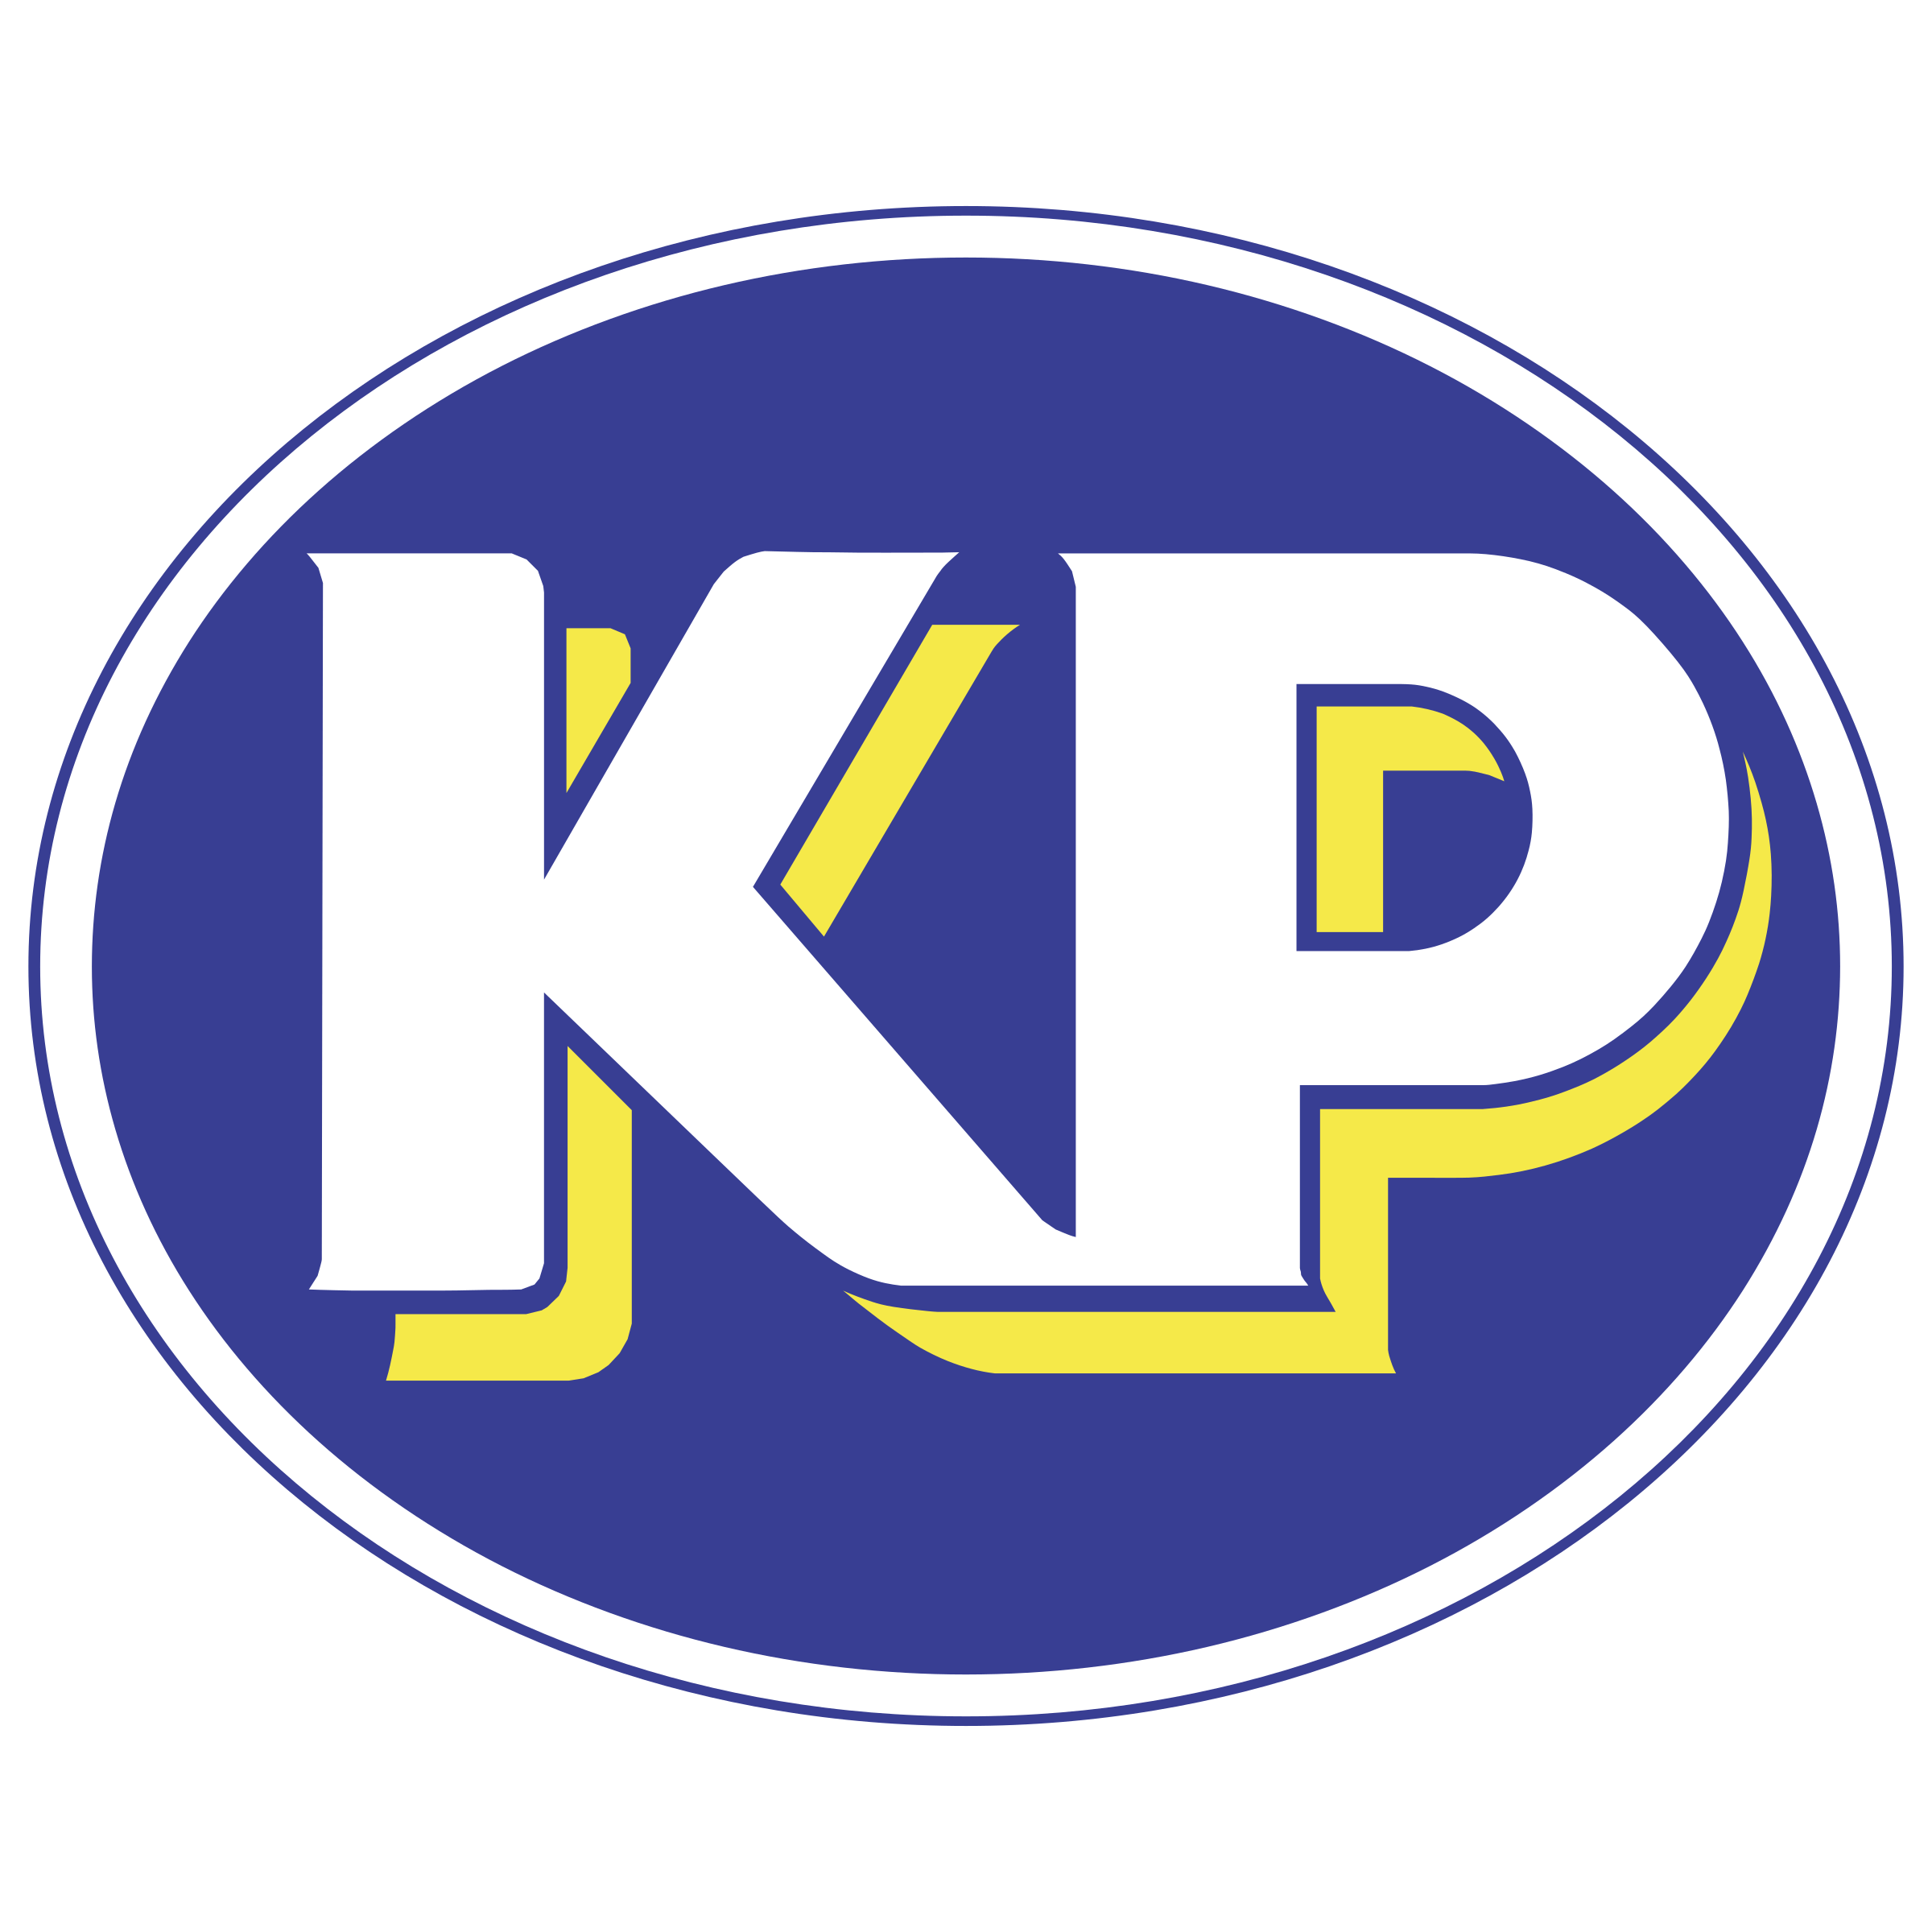 KP Logo - KP Logo PNG Transparent & SVG Vector - Freebie Supply